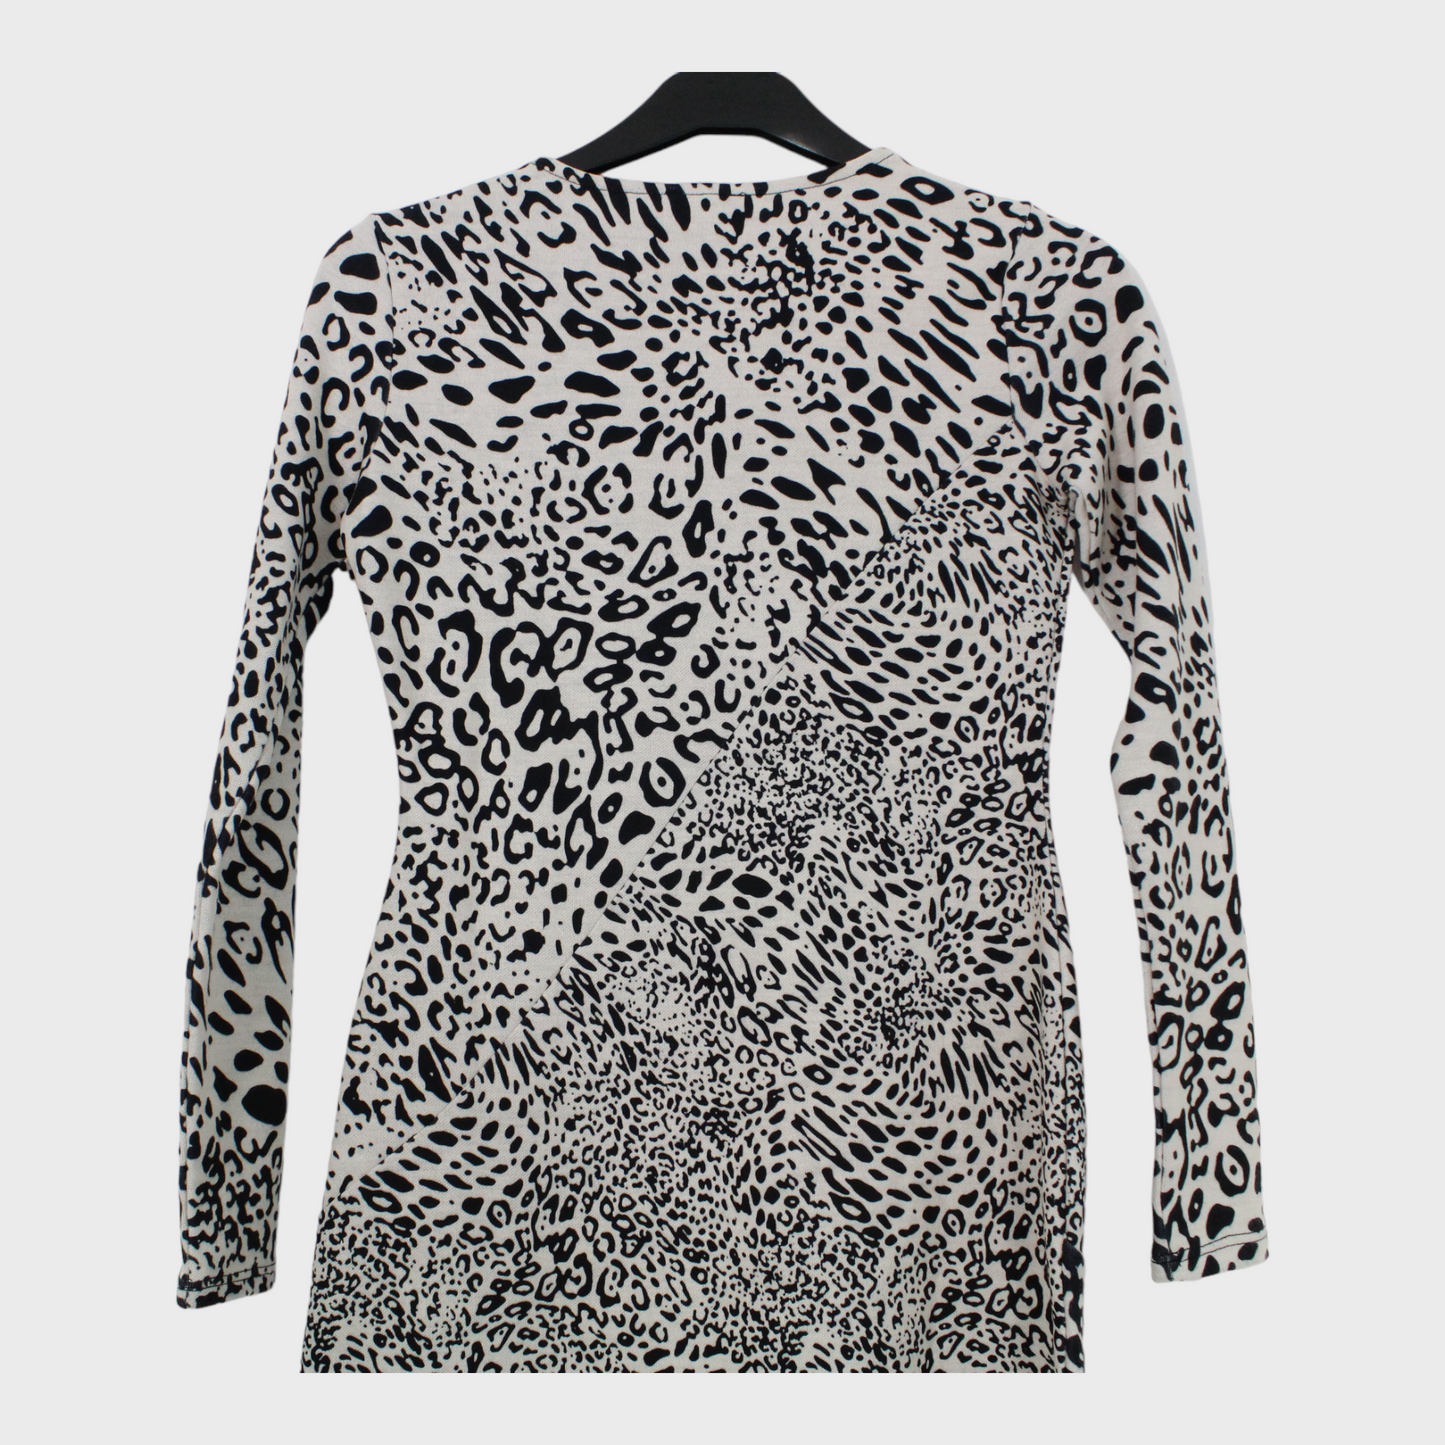 Women's Animal Print Mid Length Bodycon Dress Cream/Black Size 8 UK Petite